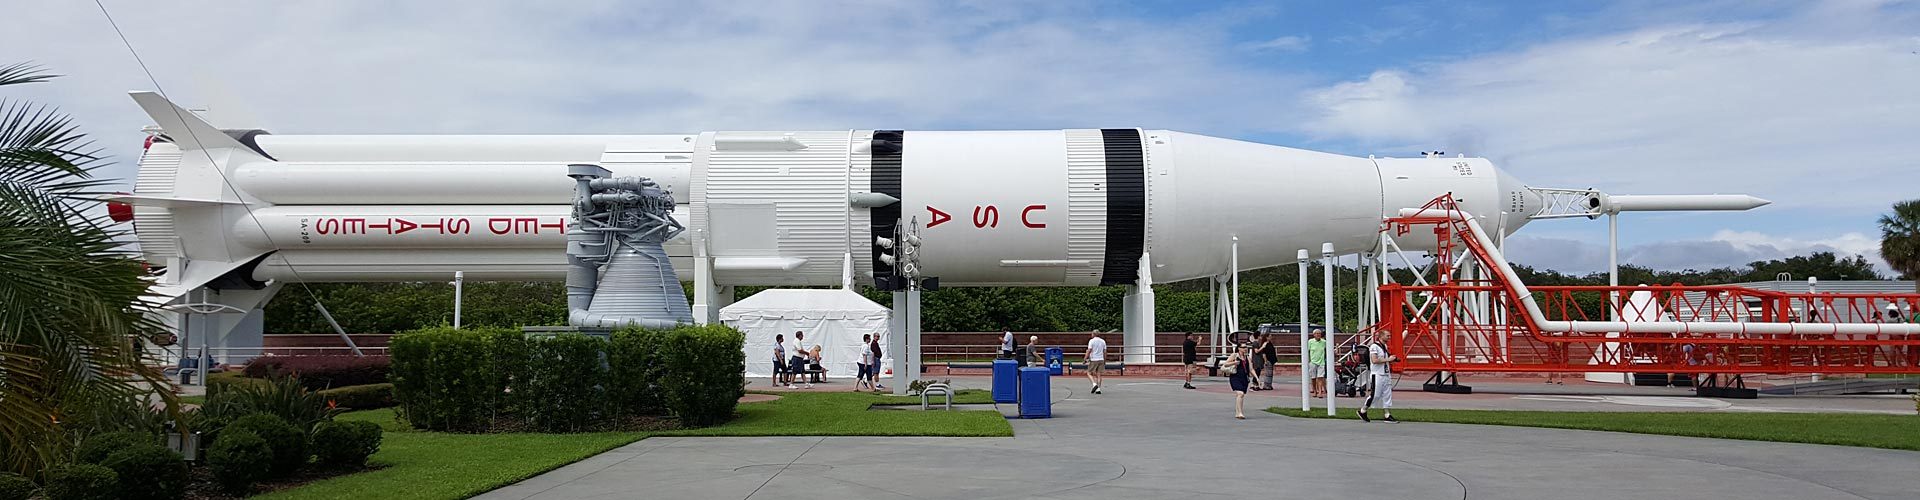 Raketengarten im Kennedy Space Center, Florida